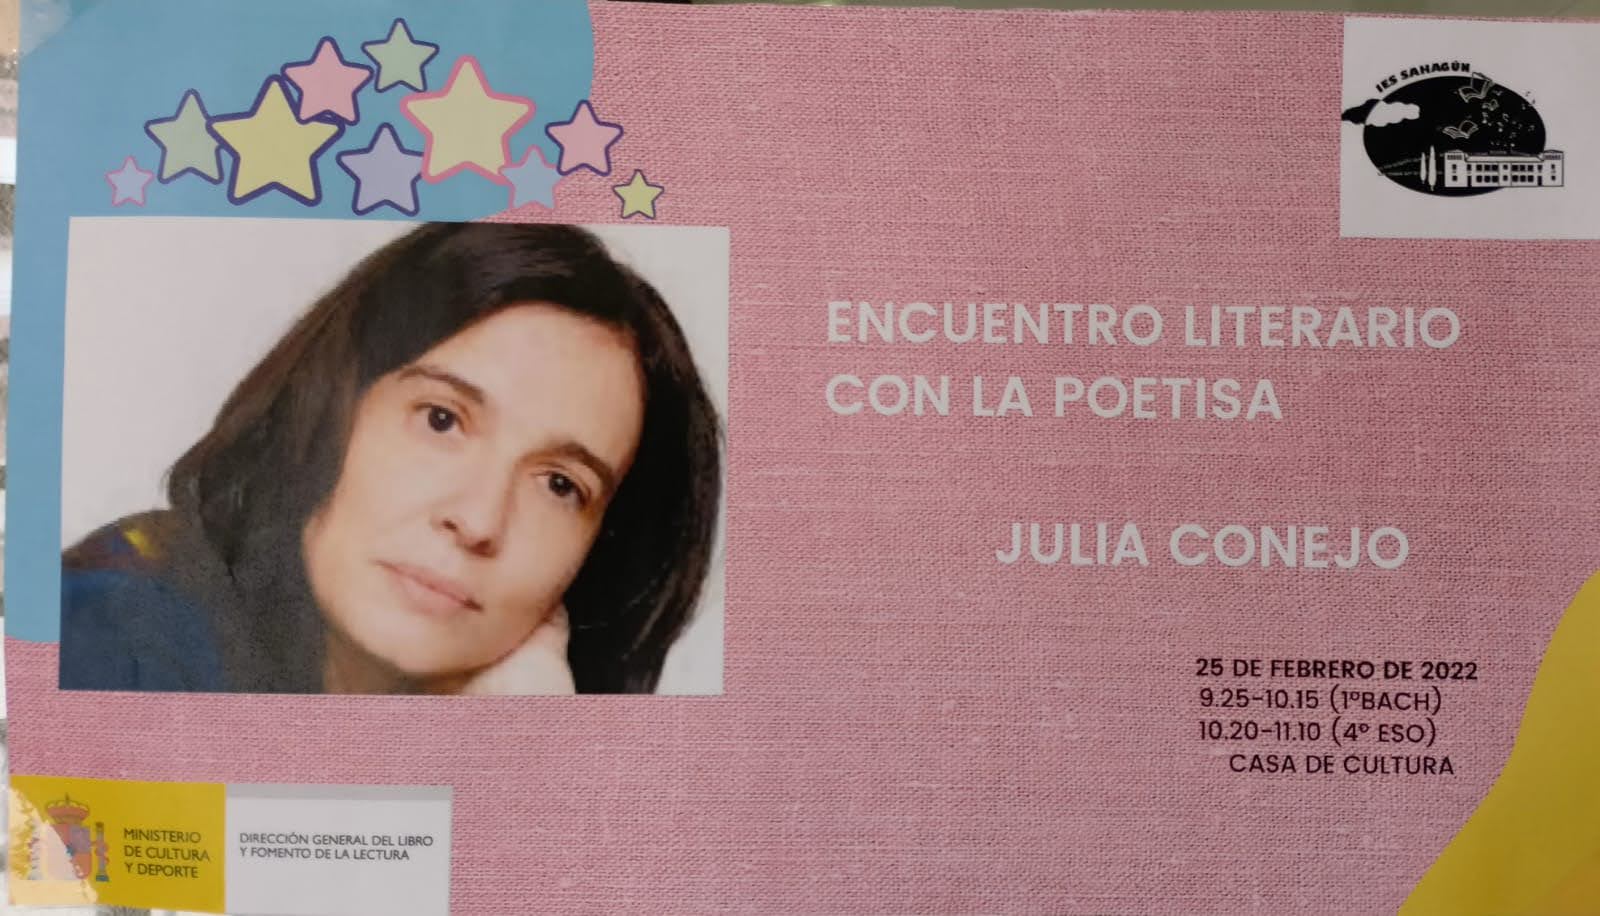 Encuentro literario con Julia Conejo